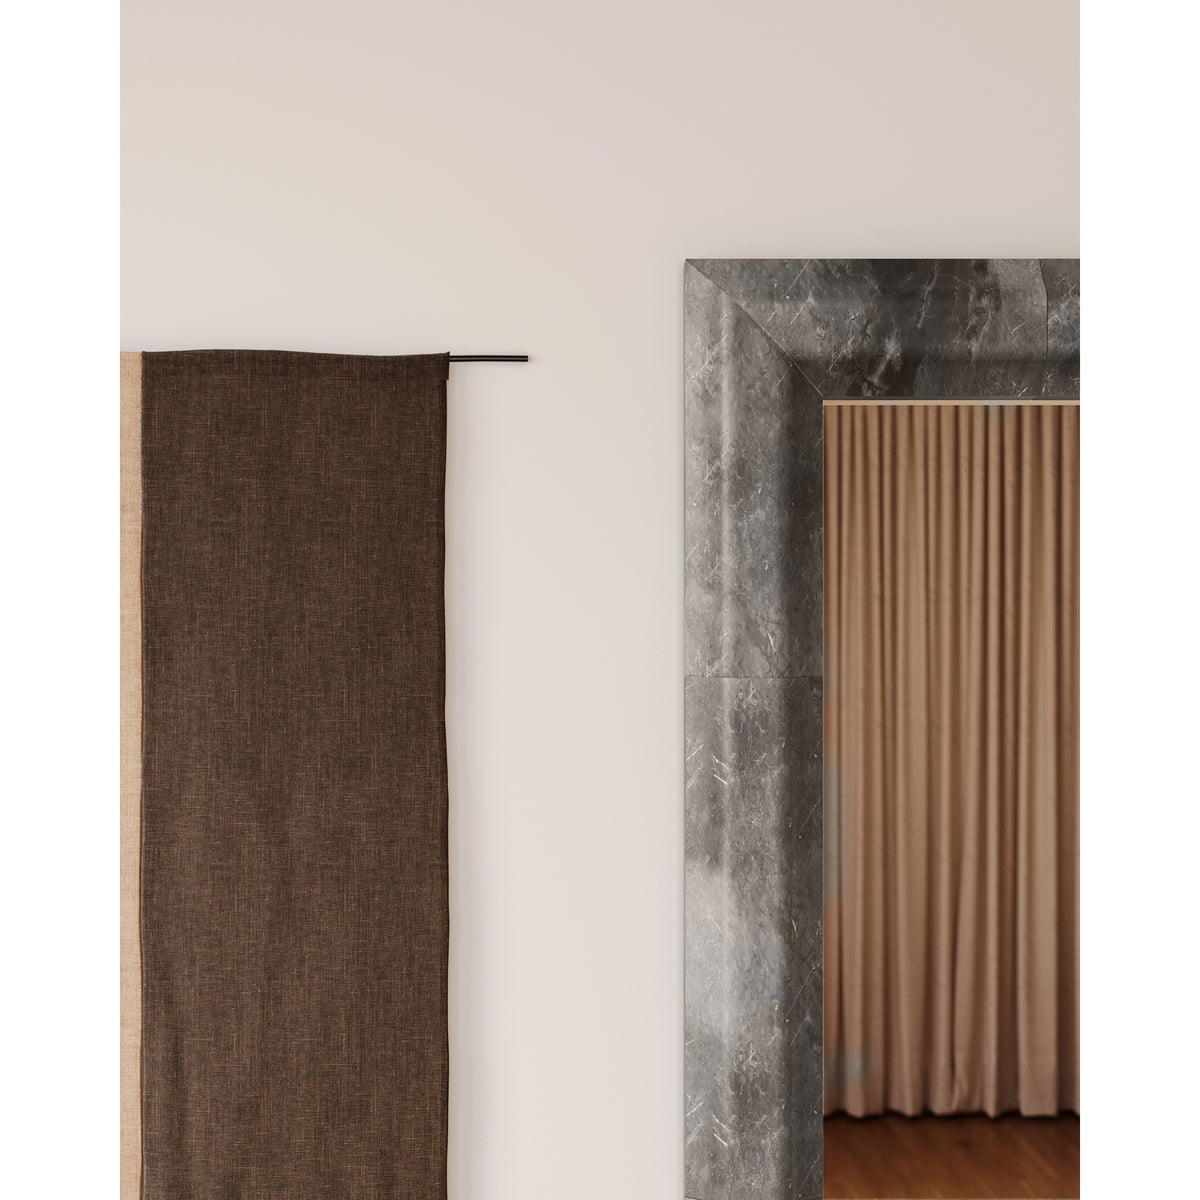 Mediterranean Door Surround shown in Modern Profile with Menorca Marble. Main Product Slider View